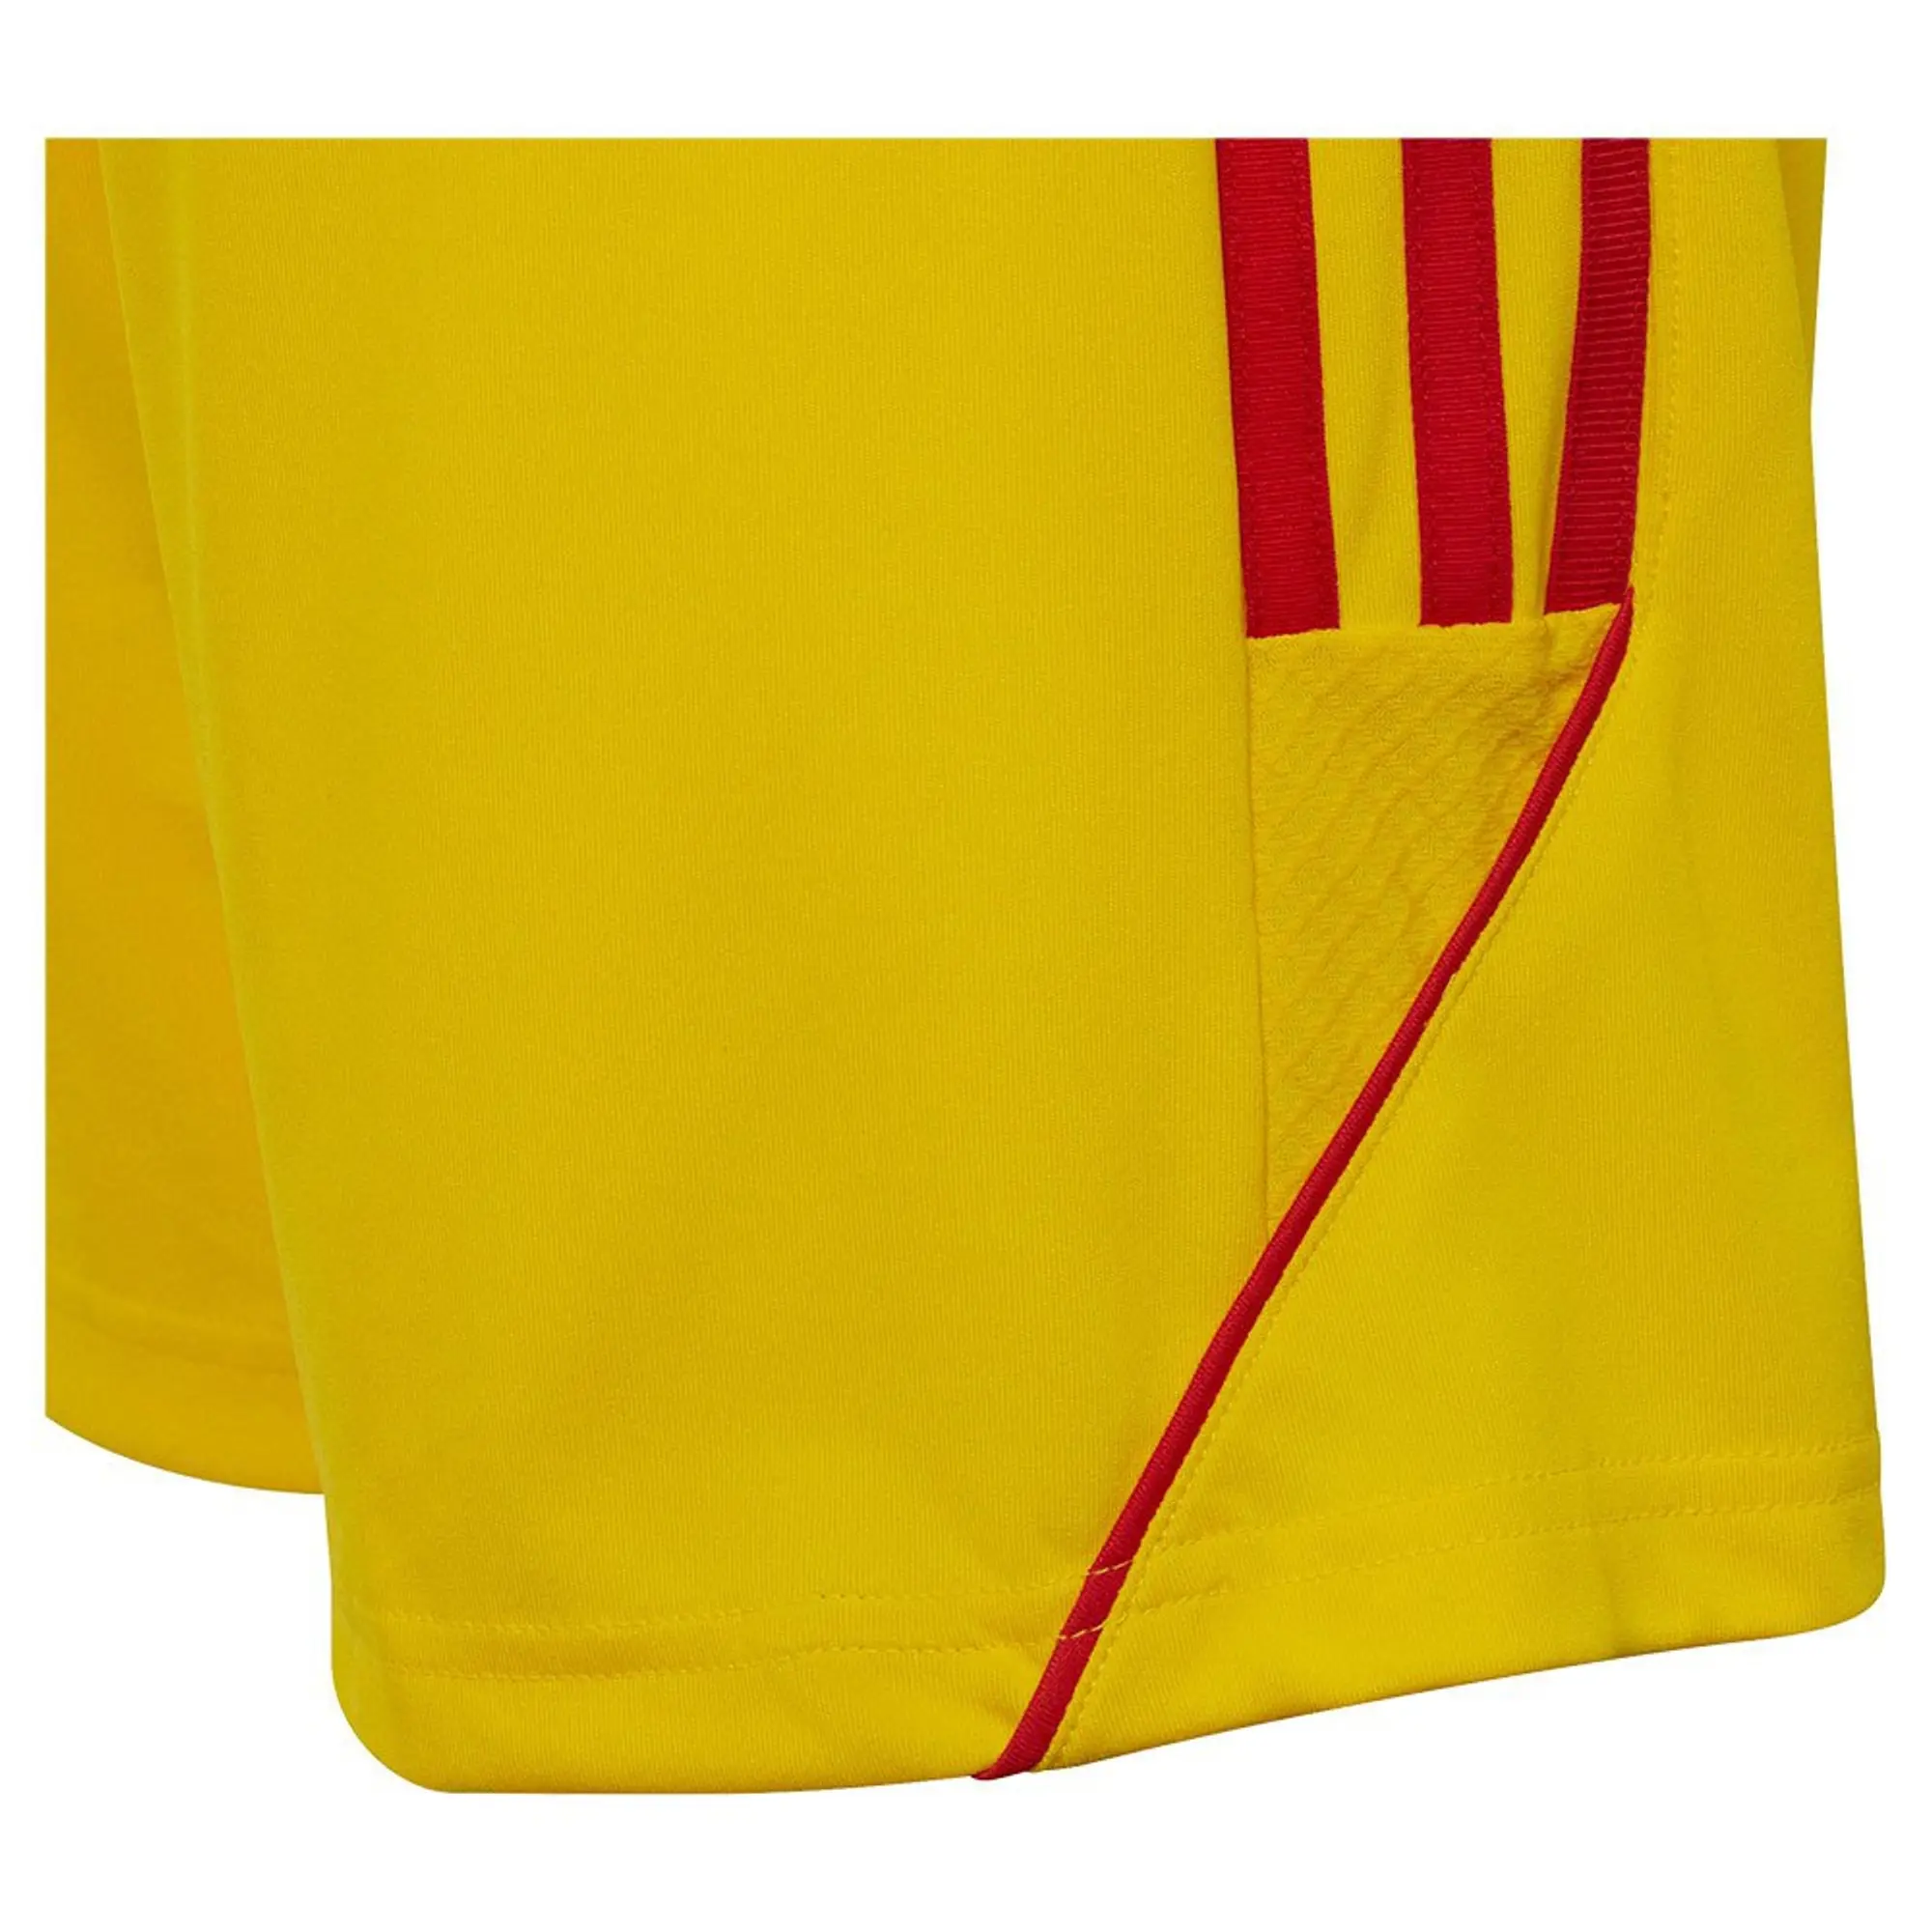 adidas Celtic FC 2023/24 Goalkeeper Home Shirts Junior - Team Yellow